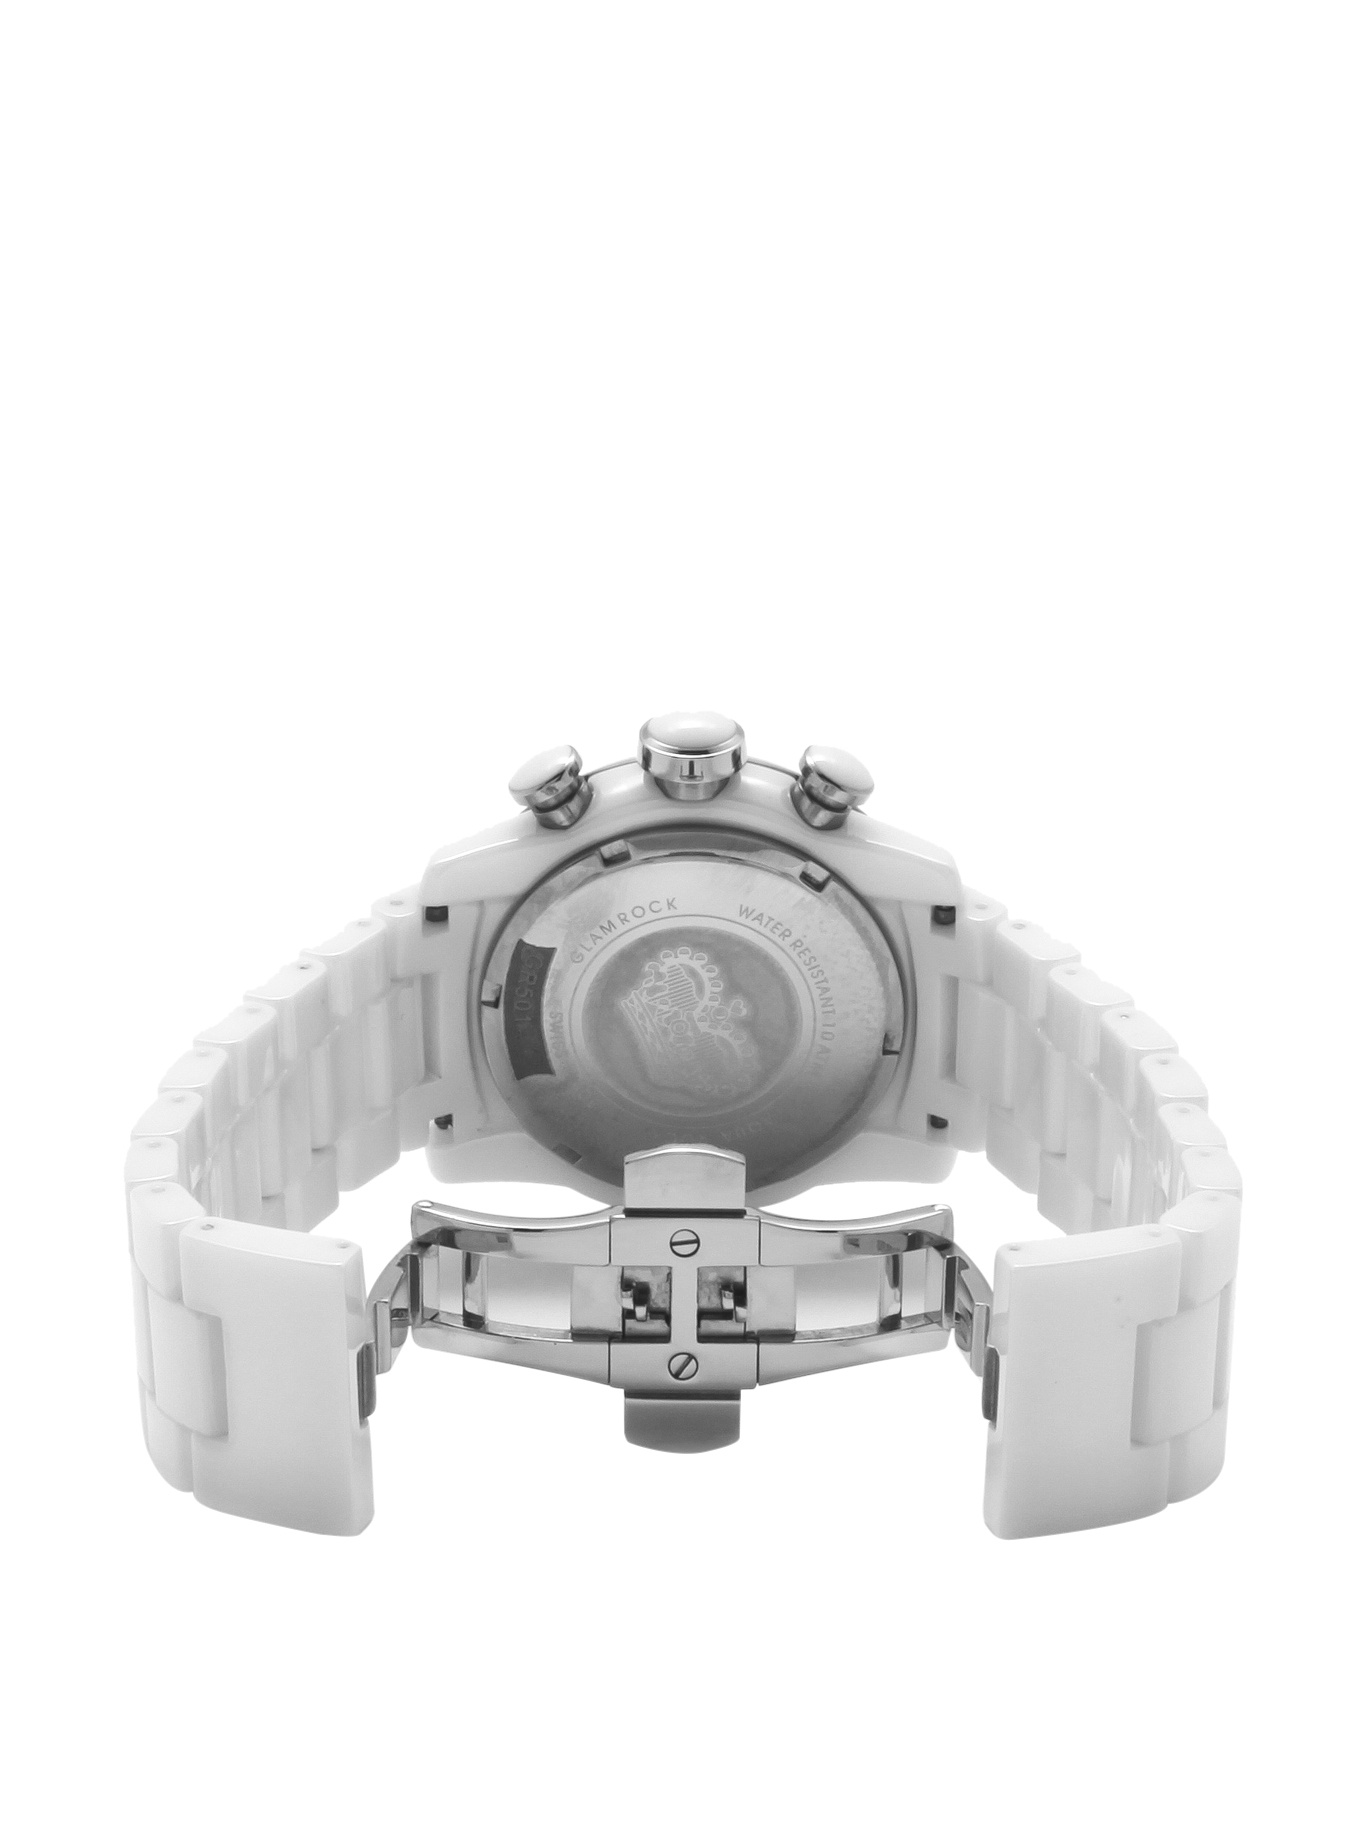 Glam Rock Women's GR50100 Aqua Rock White/Silver Ceramic Watch